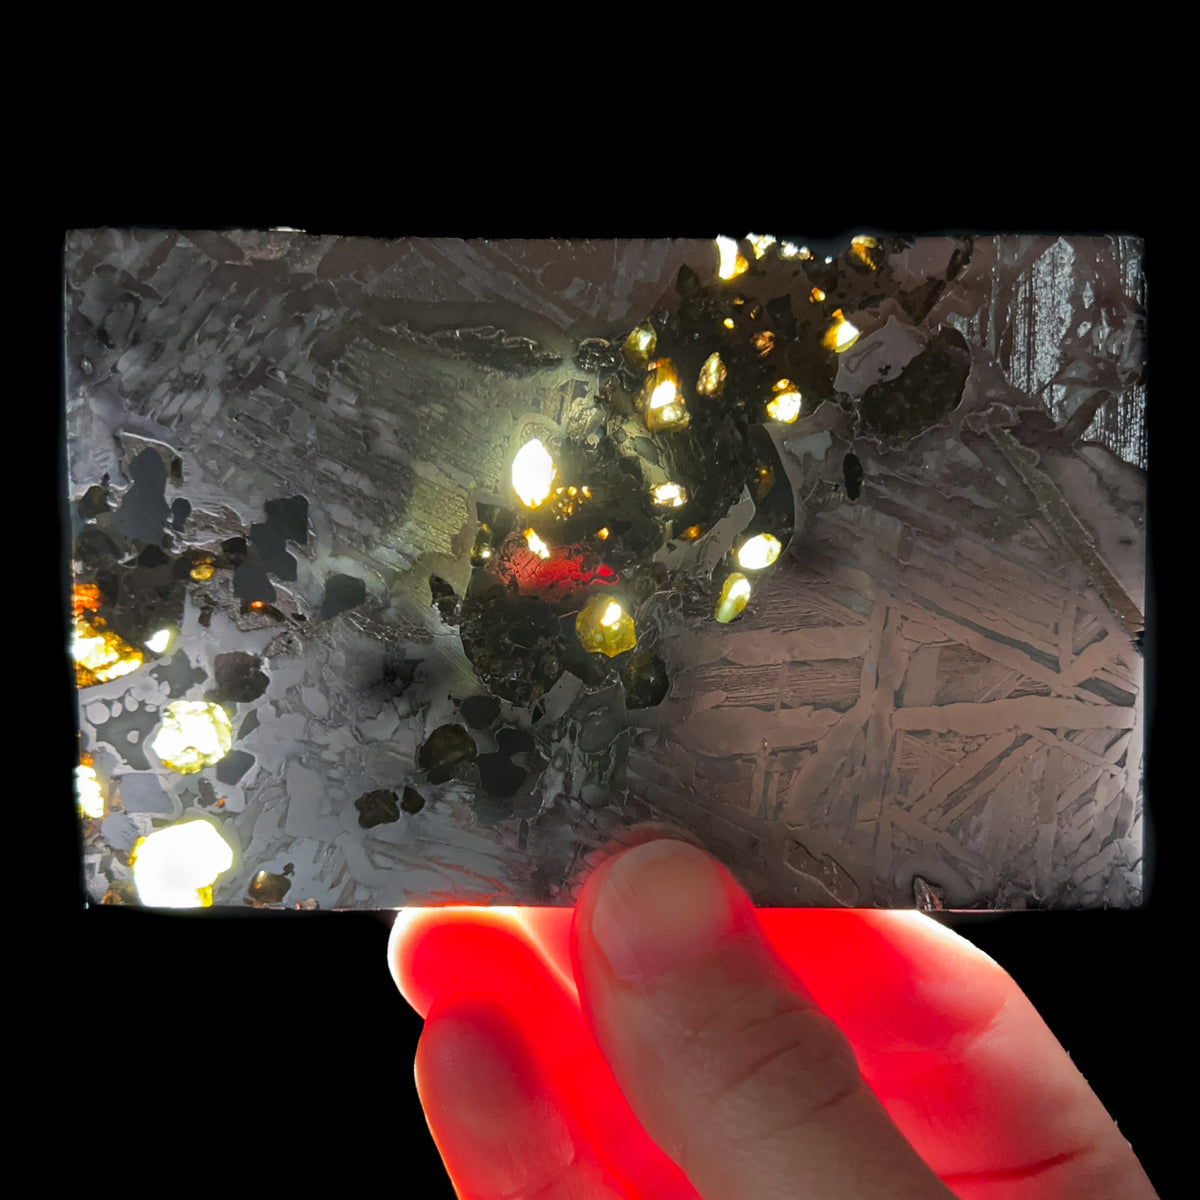 Backlit Pallasite Meteorite Slice from Seymchan Russia